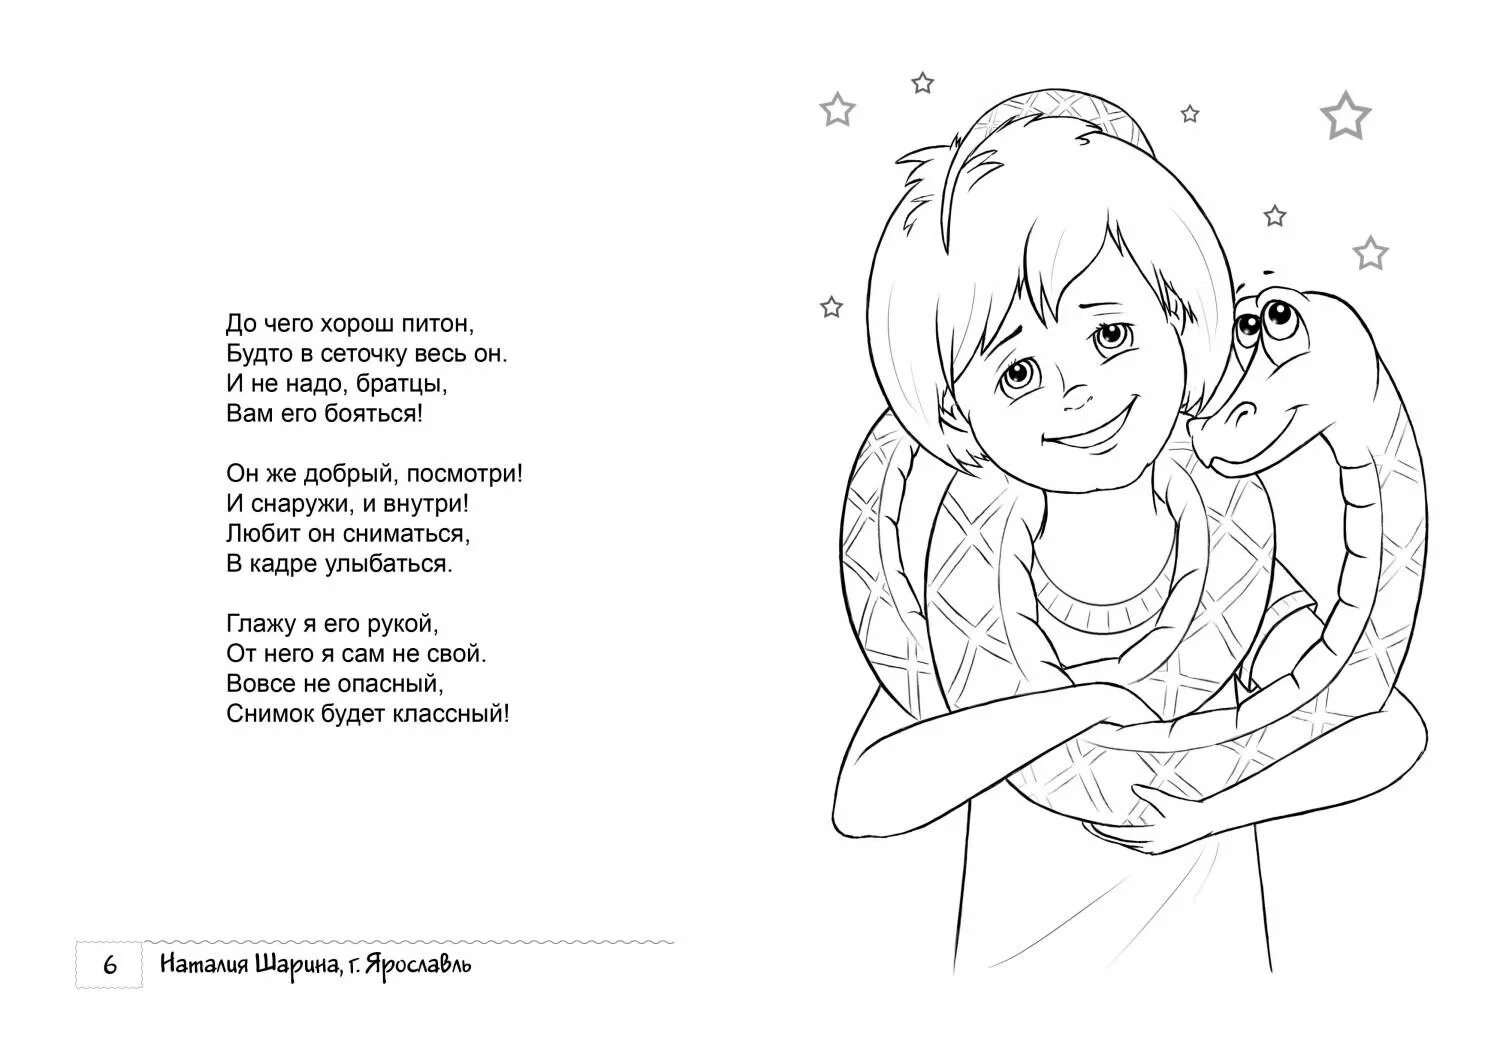 For preschoolers based on barto poetry #16